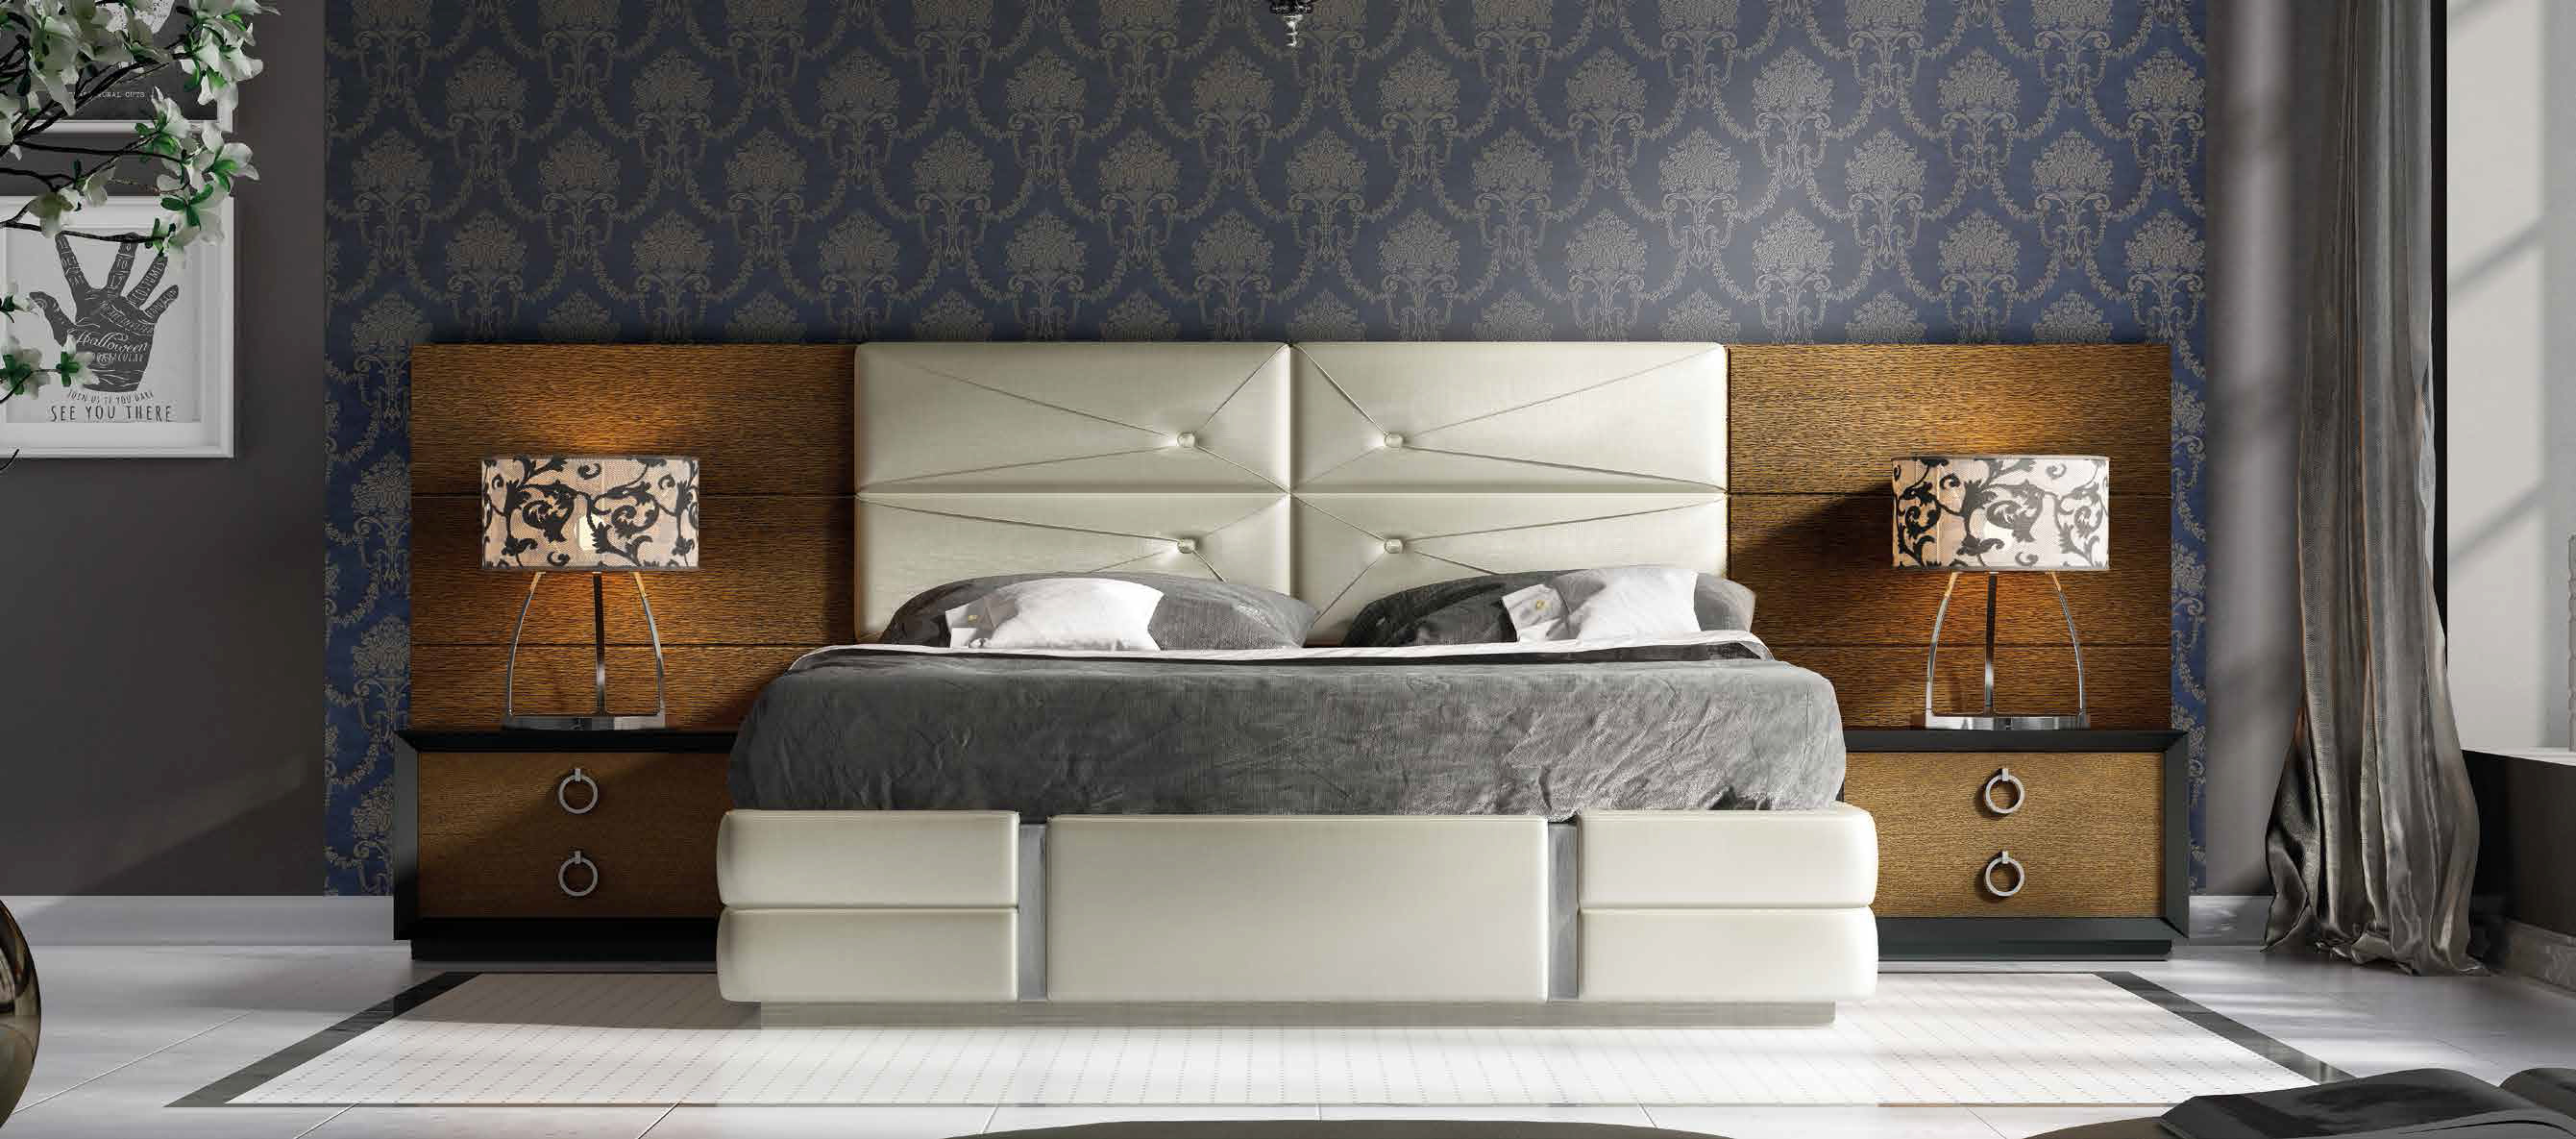 Brands Franco Furniture Bedrooms vol2, Spain DOR 66